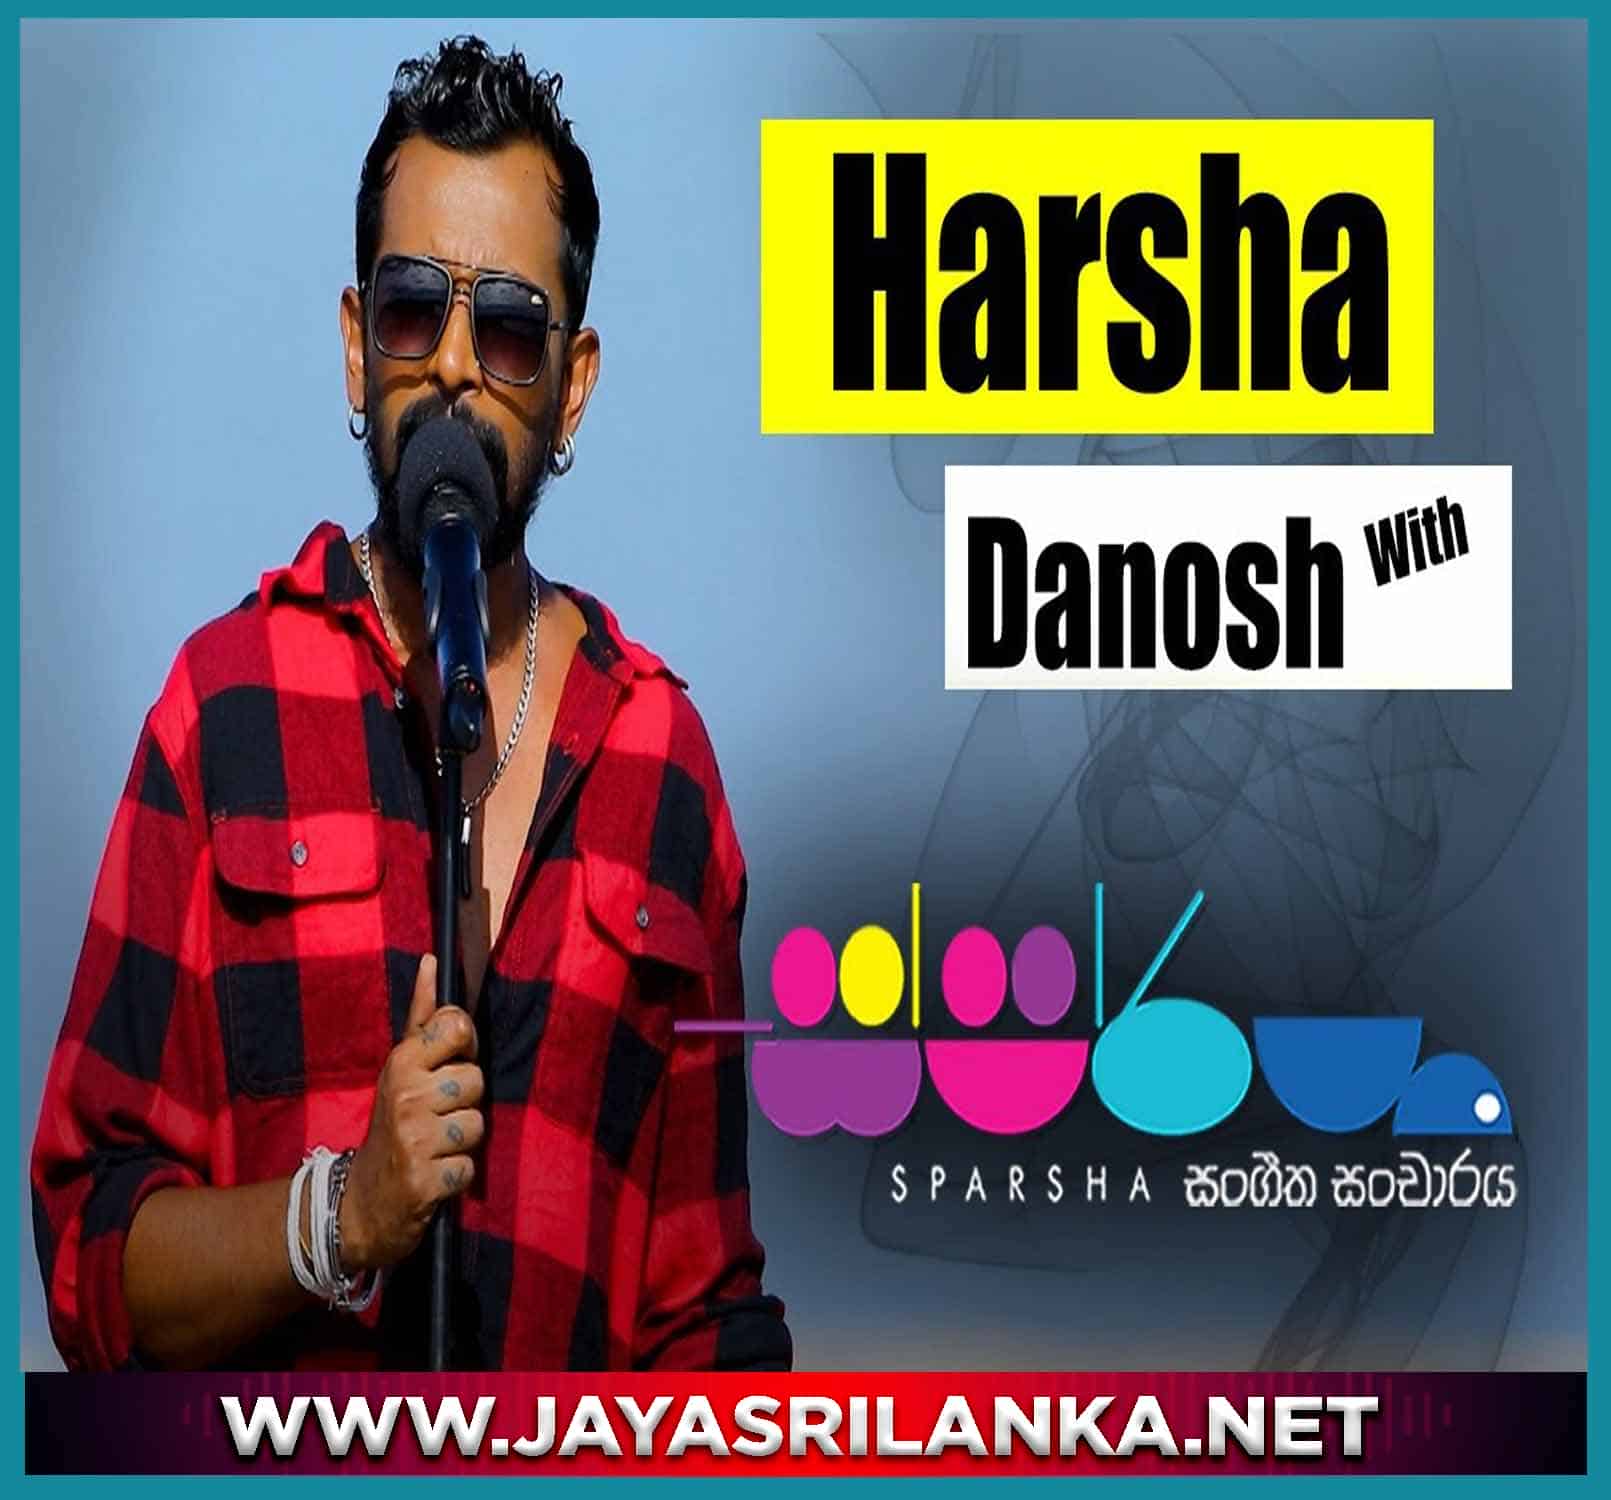 06 - Ninda Nathi Raye (Sparsha) - Harsha Danosh mp3 Image